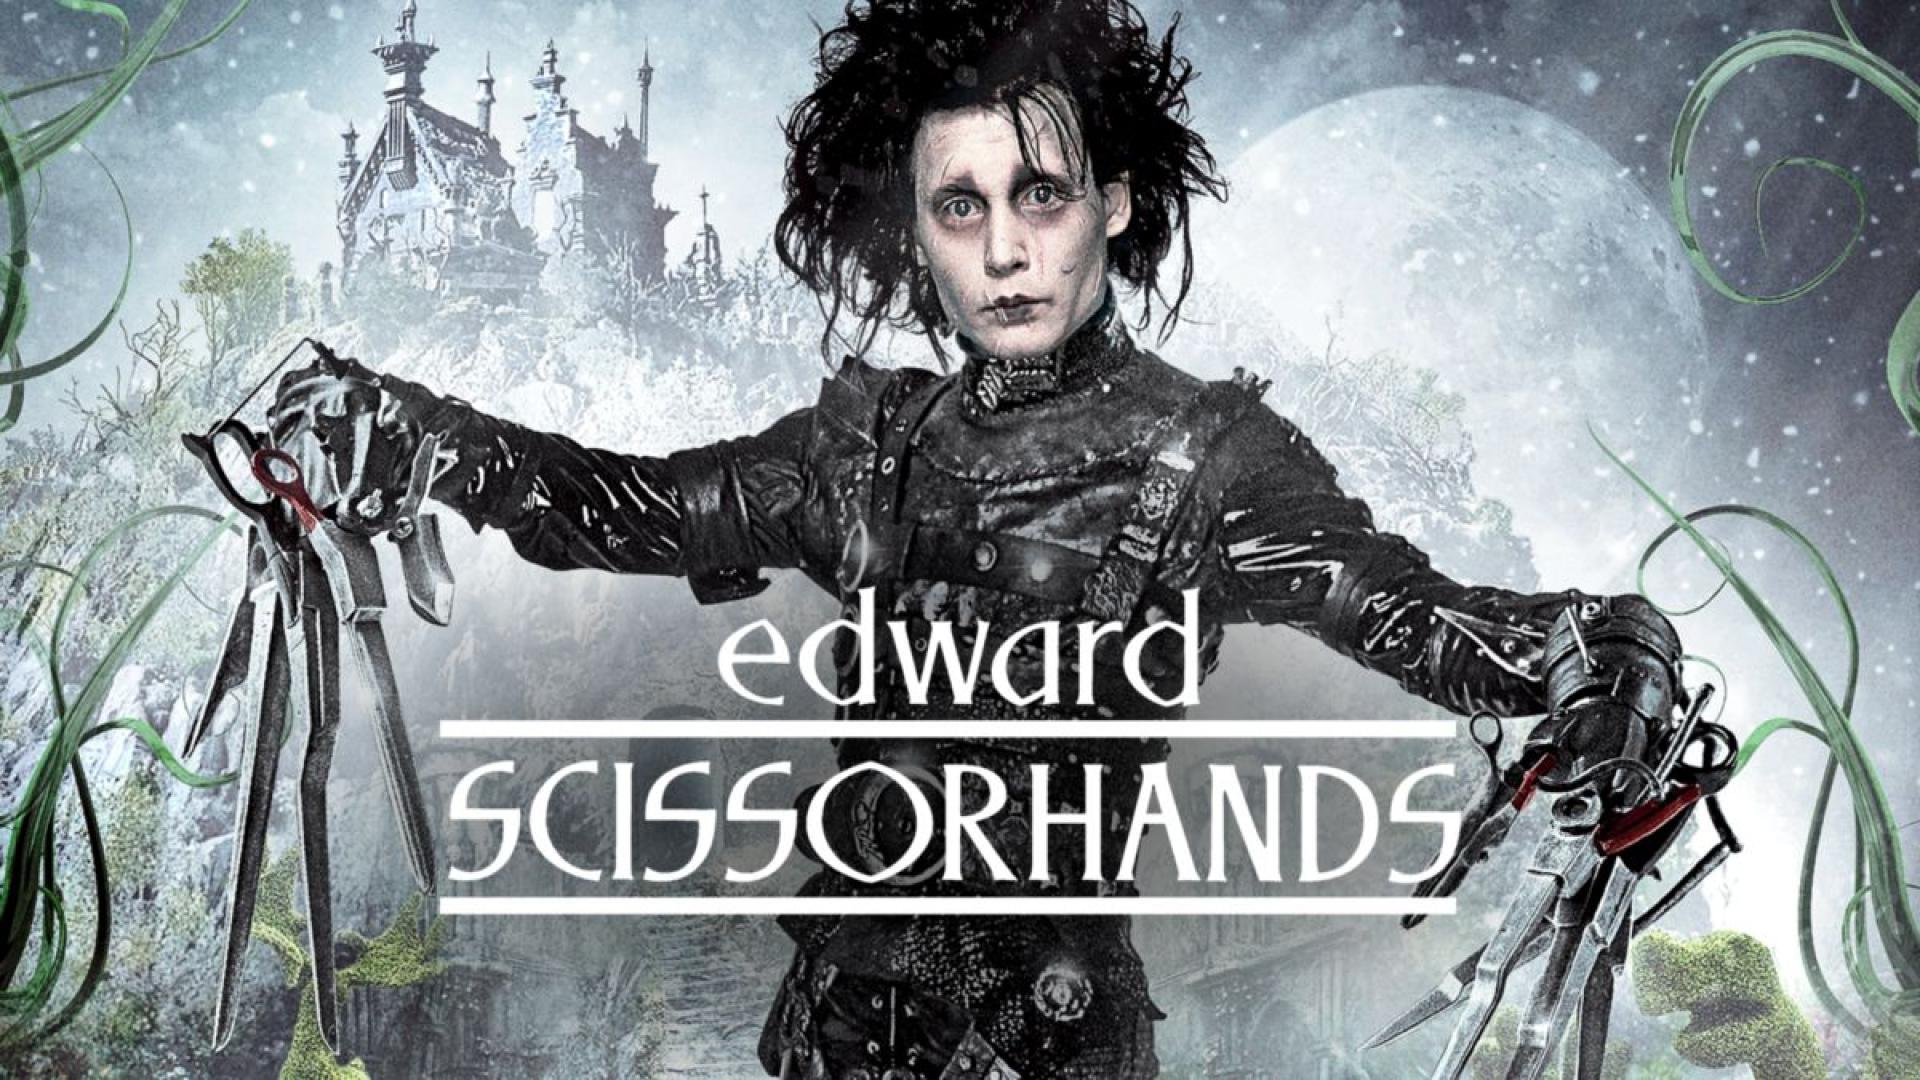 Edward Scissorhands - Ollókezű Edward (1990)